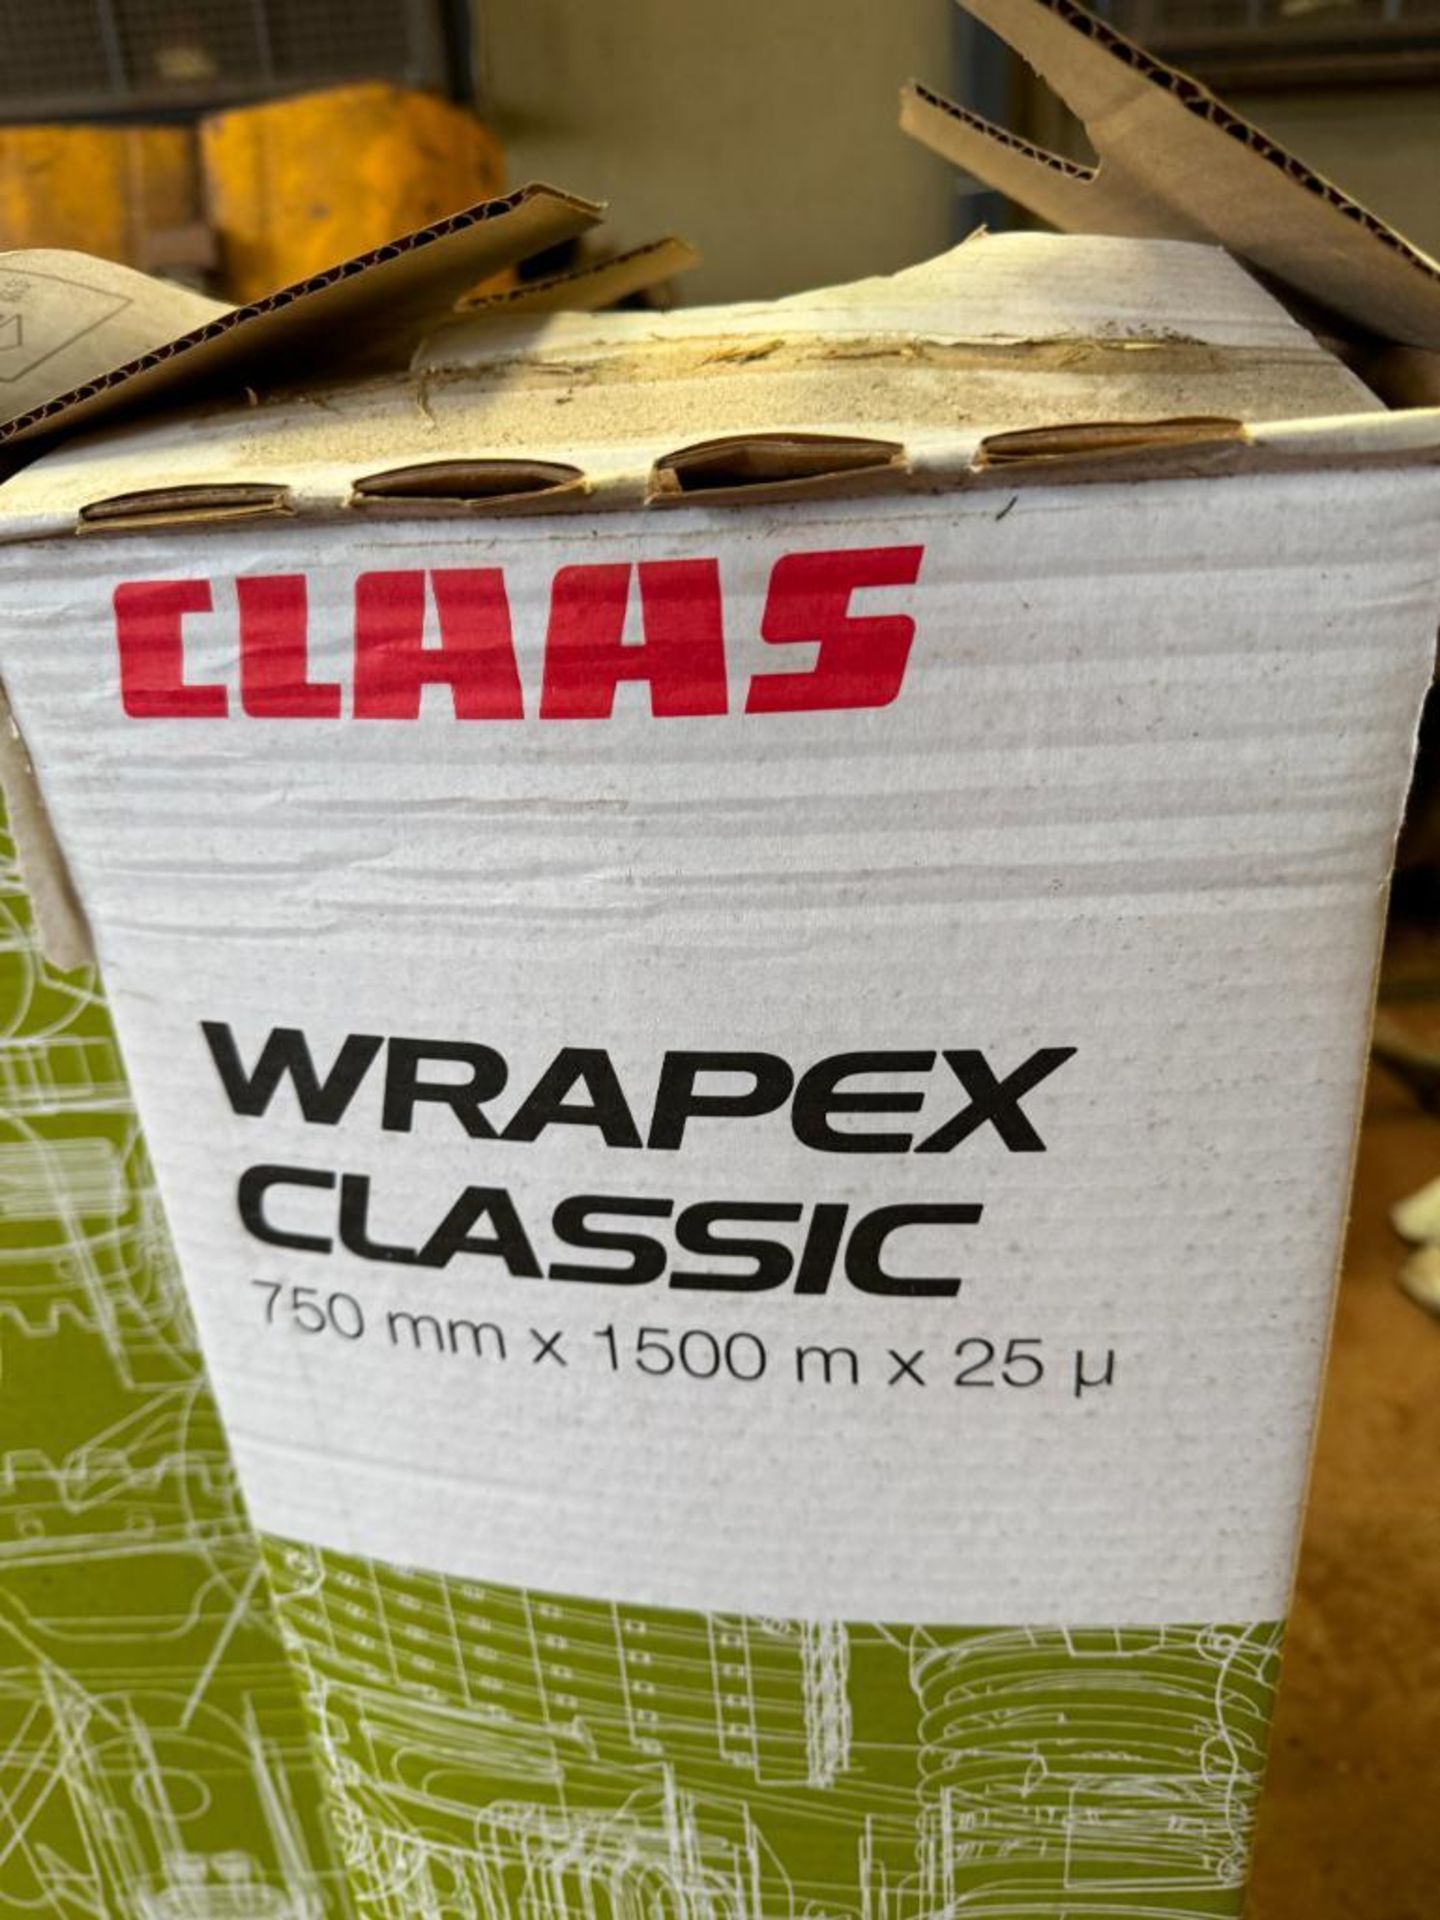 4No Class Wrapex Classic 750mm x 1500m x 25U rolls of black wrap - Image 2 of 3